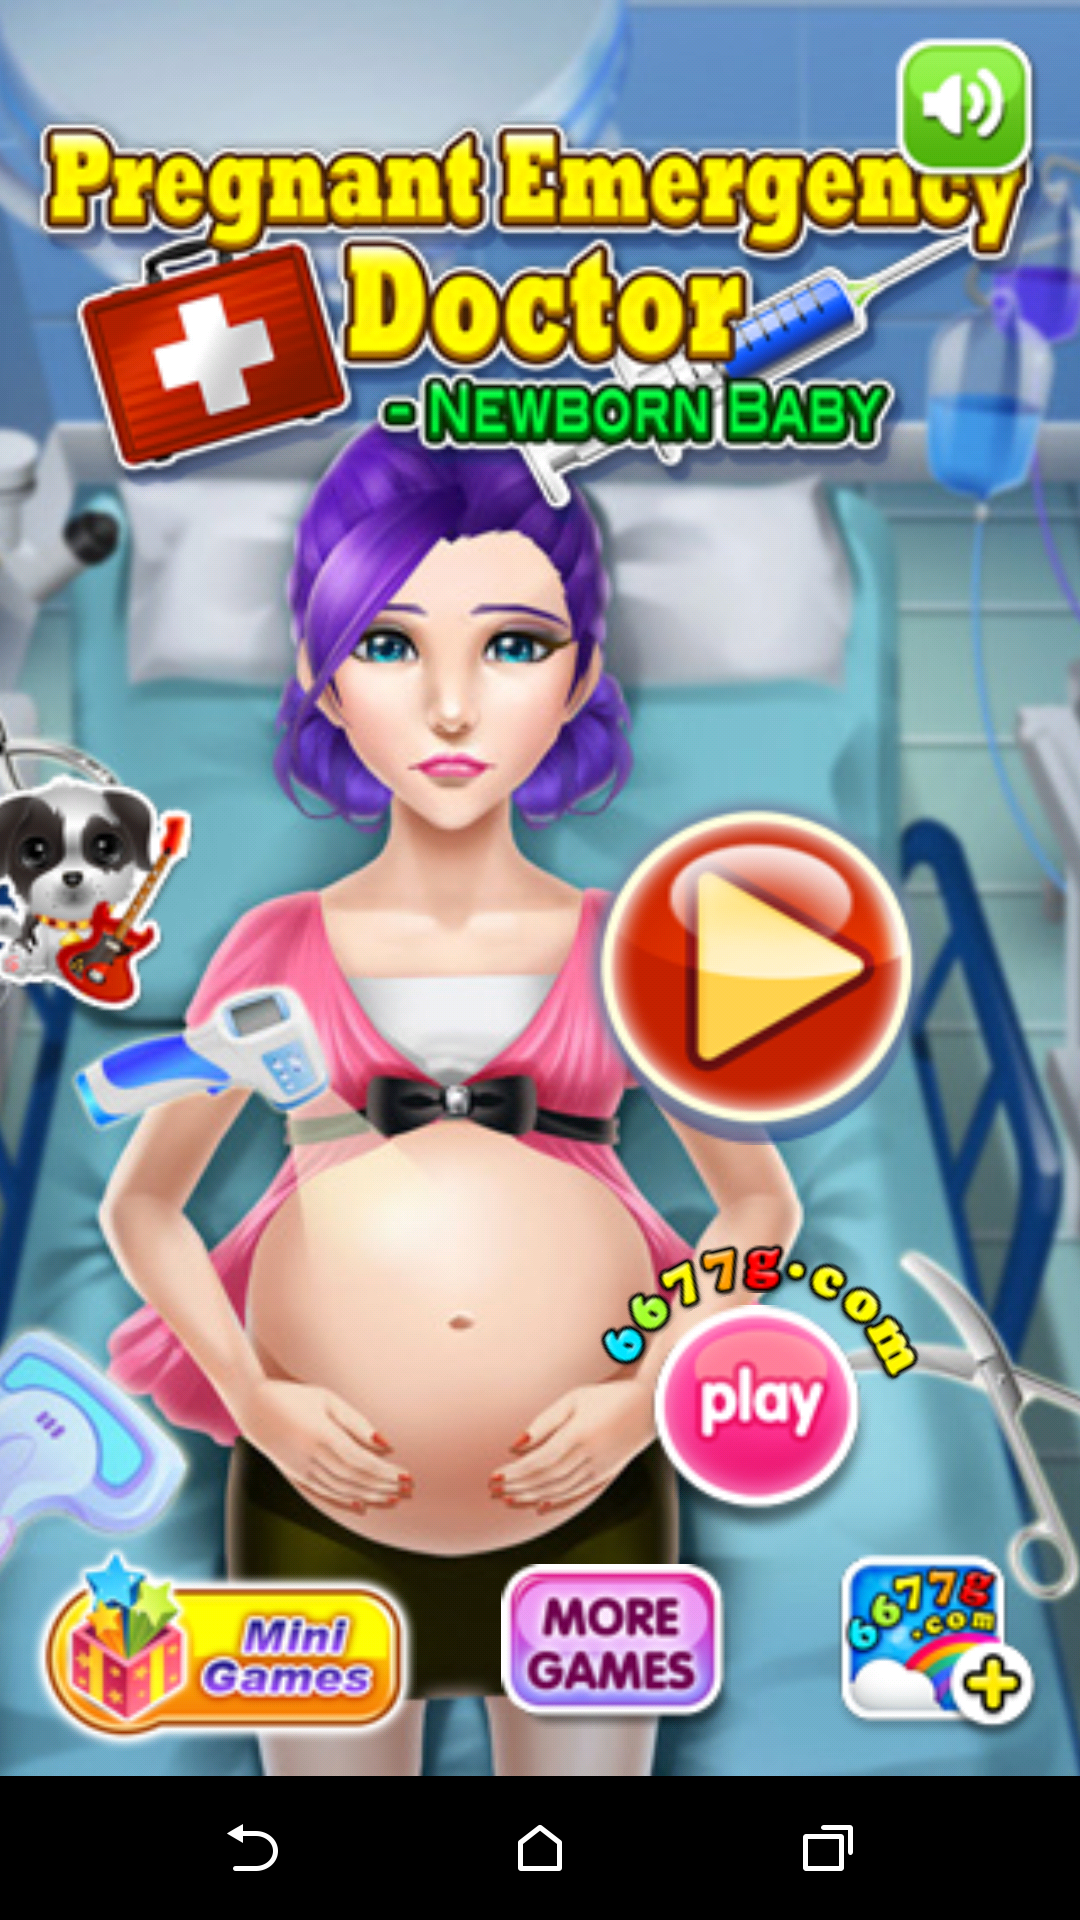 Pregnant Emergency Doctor, 6677g.com, 2015